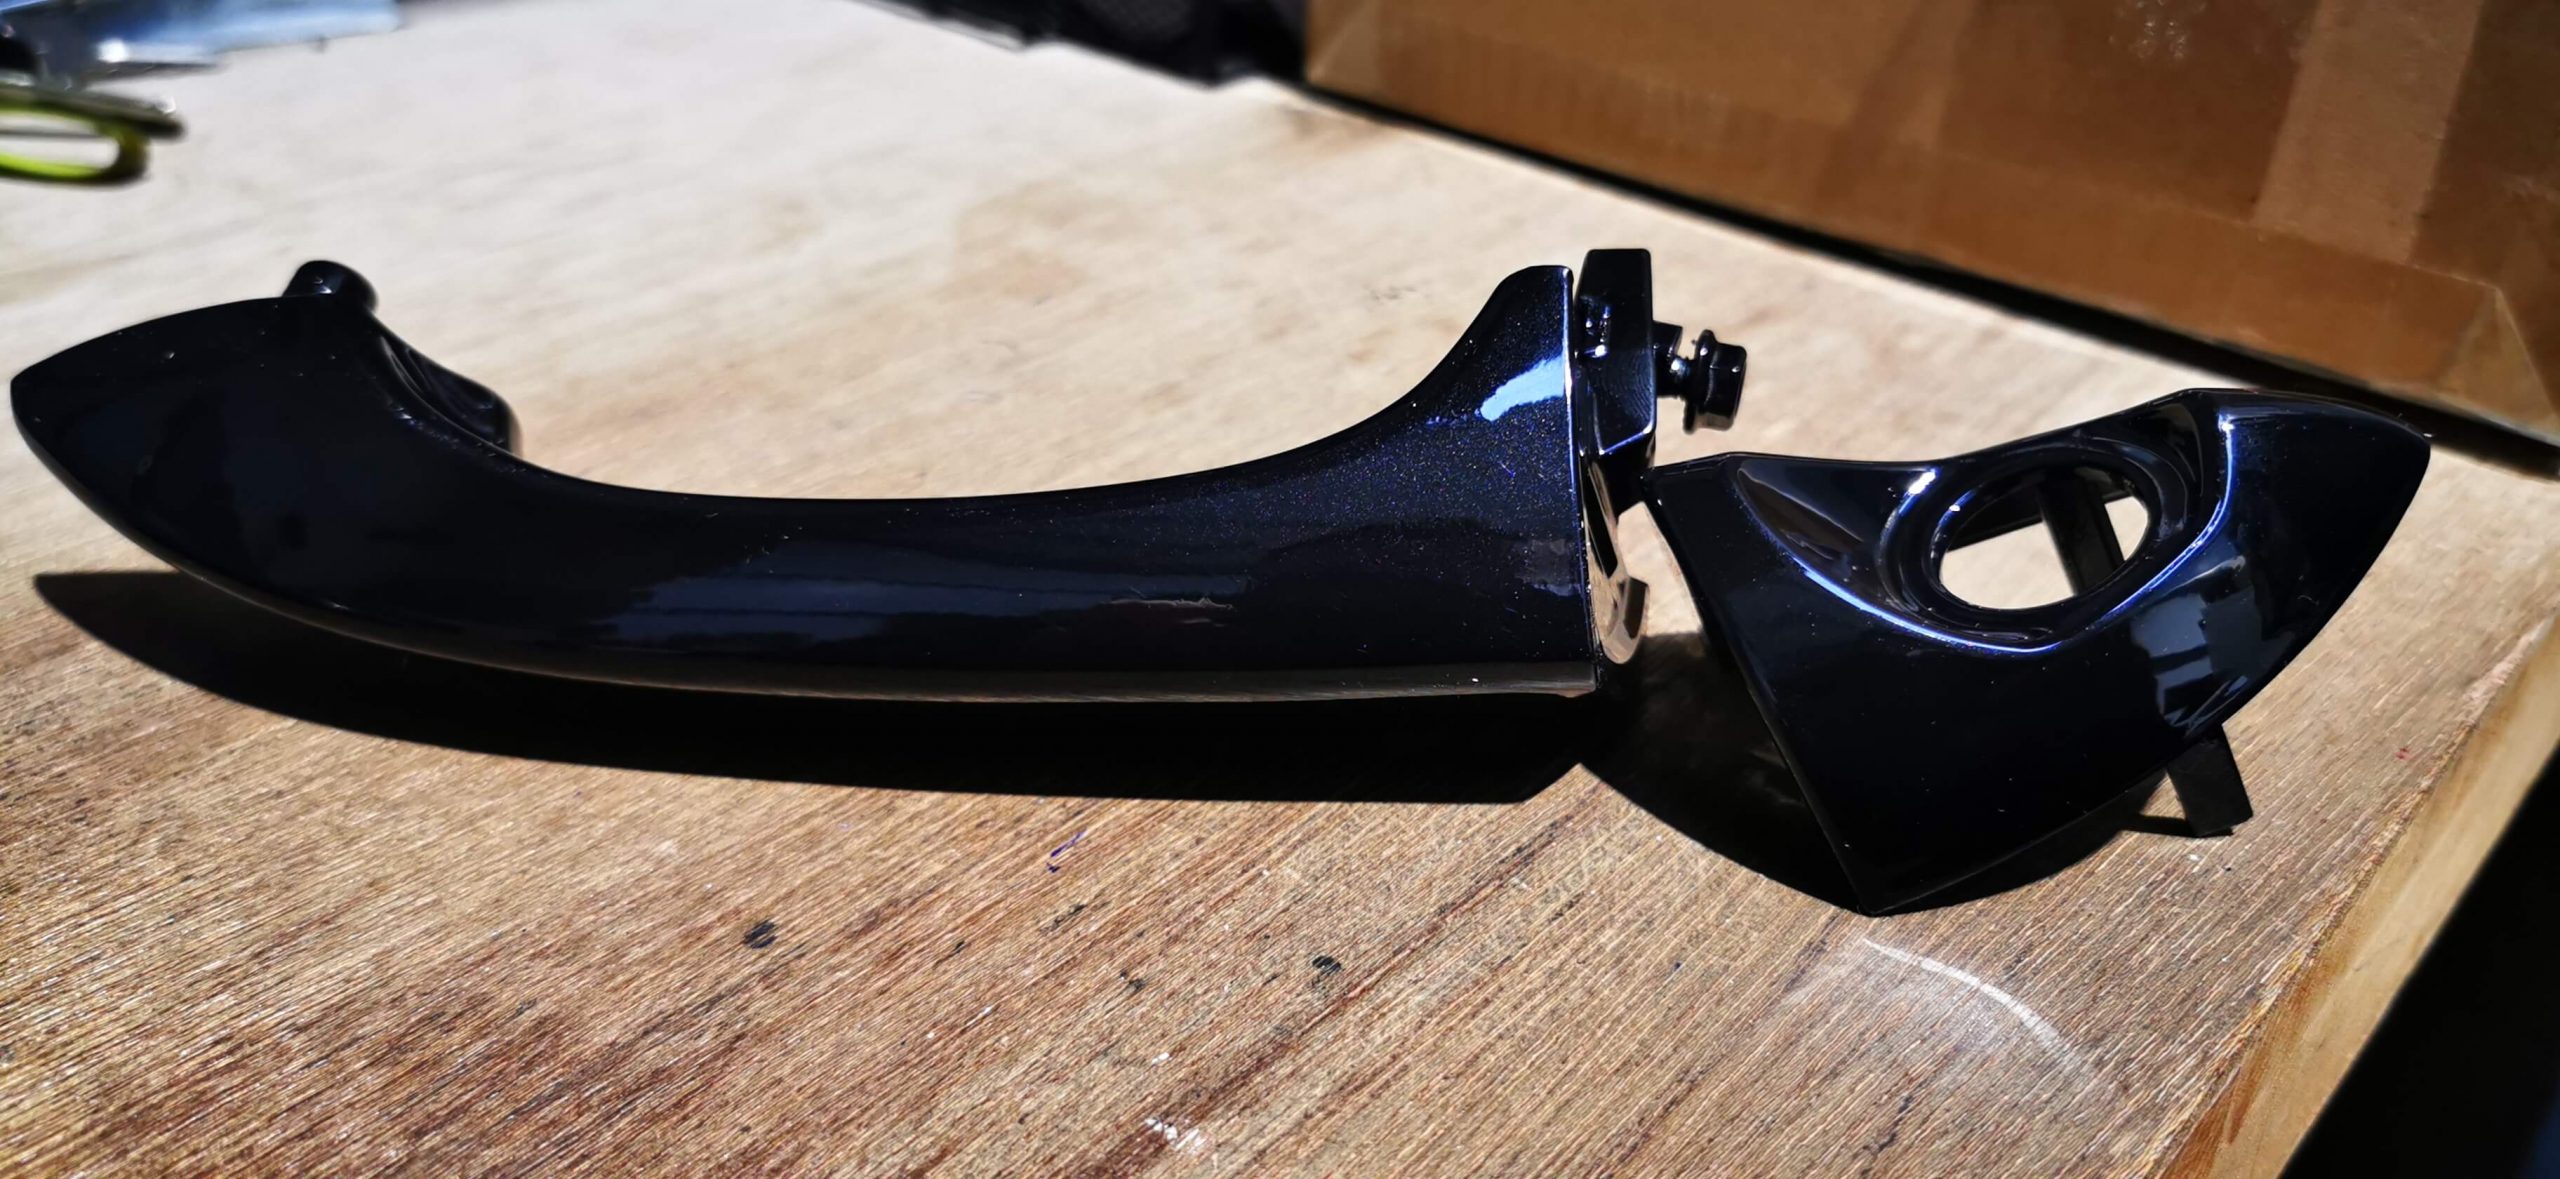 Finished black BMW handle